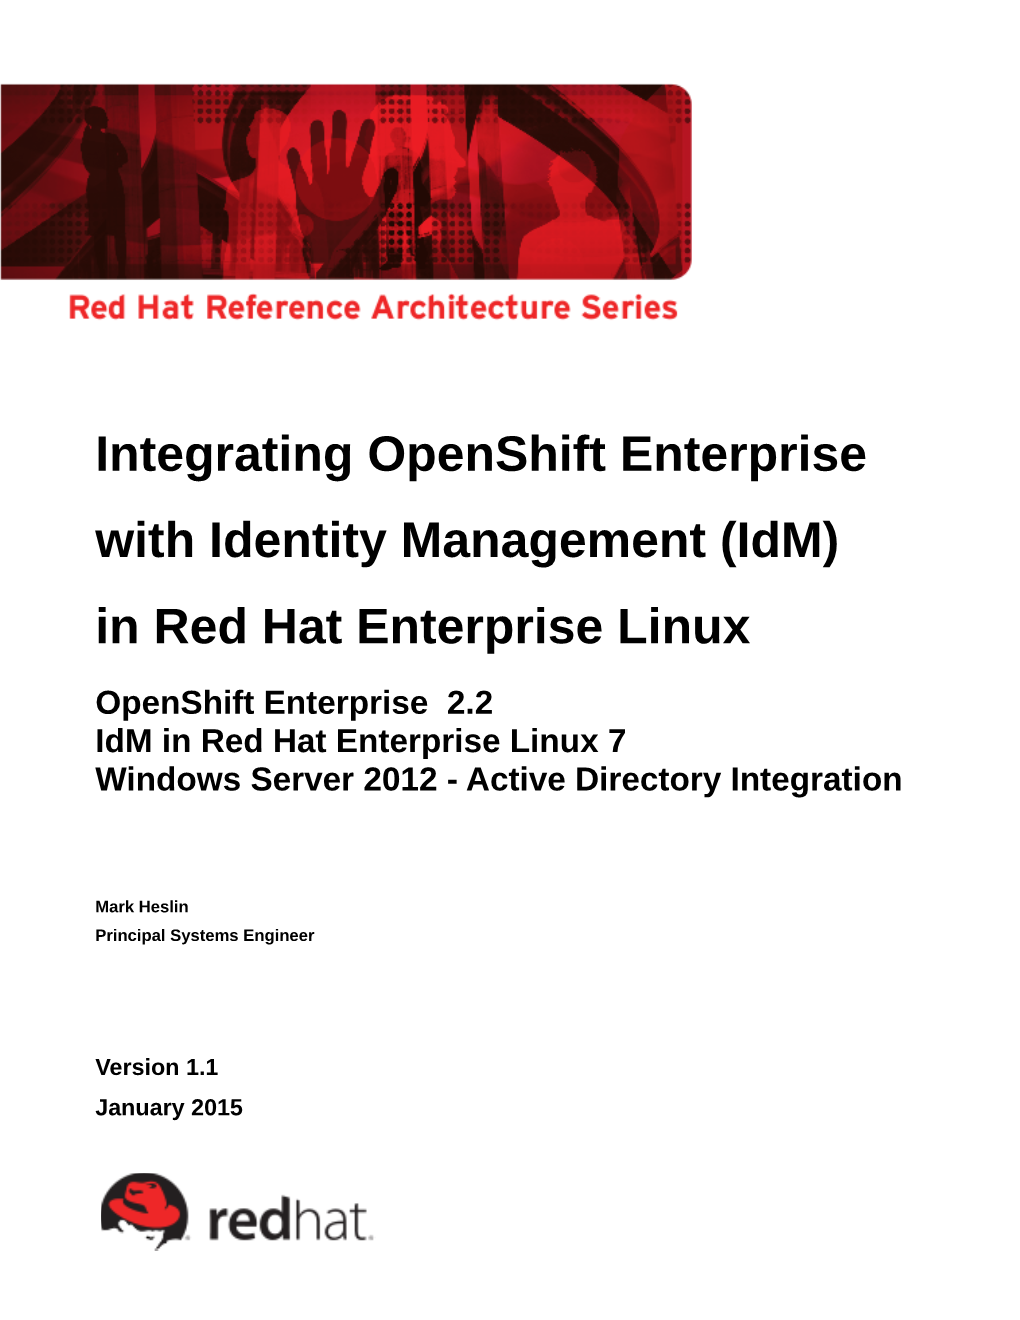 Integrating Openshift Enterprise with Identity Management (Idm) in Red Hat Enterprise Linux